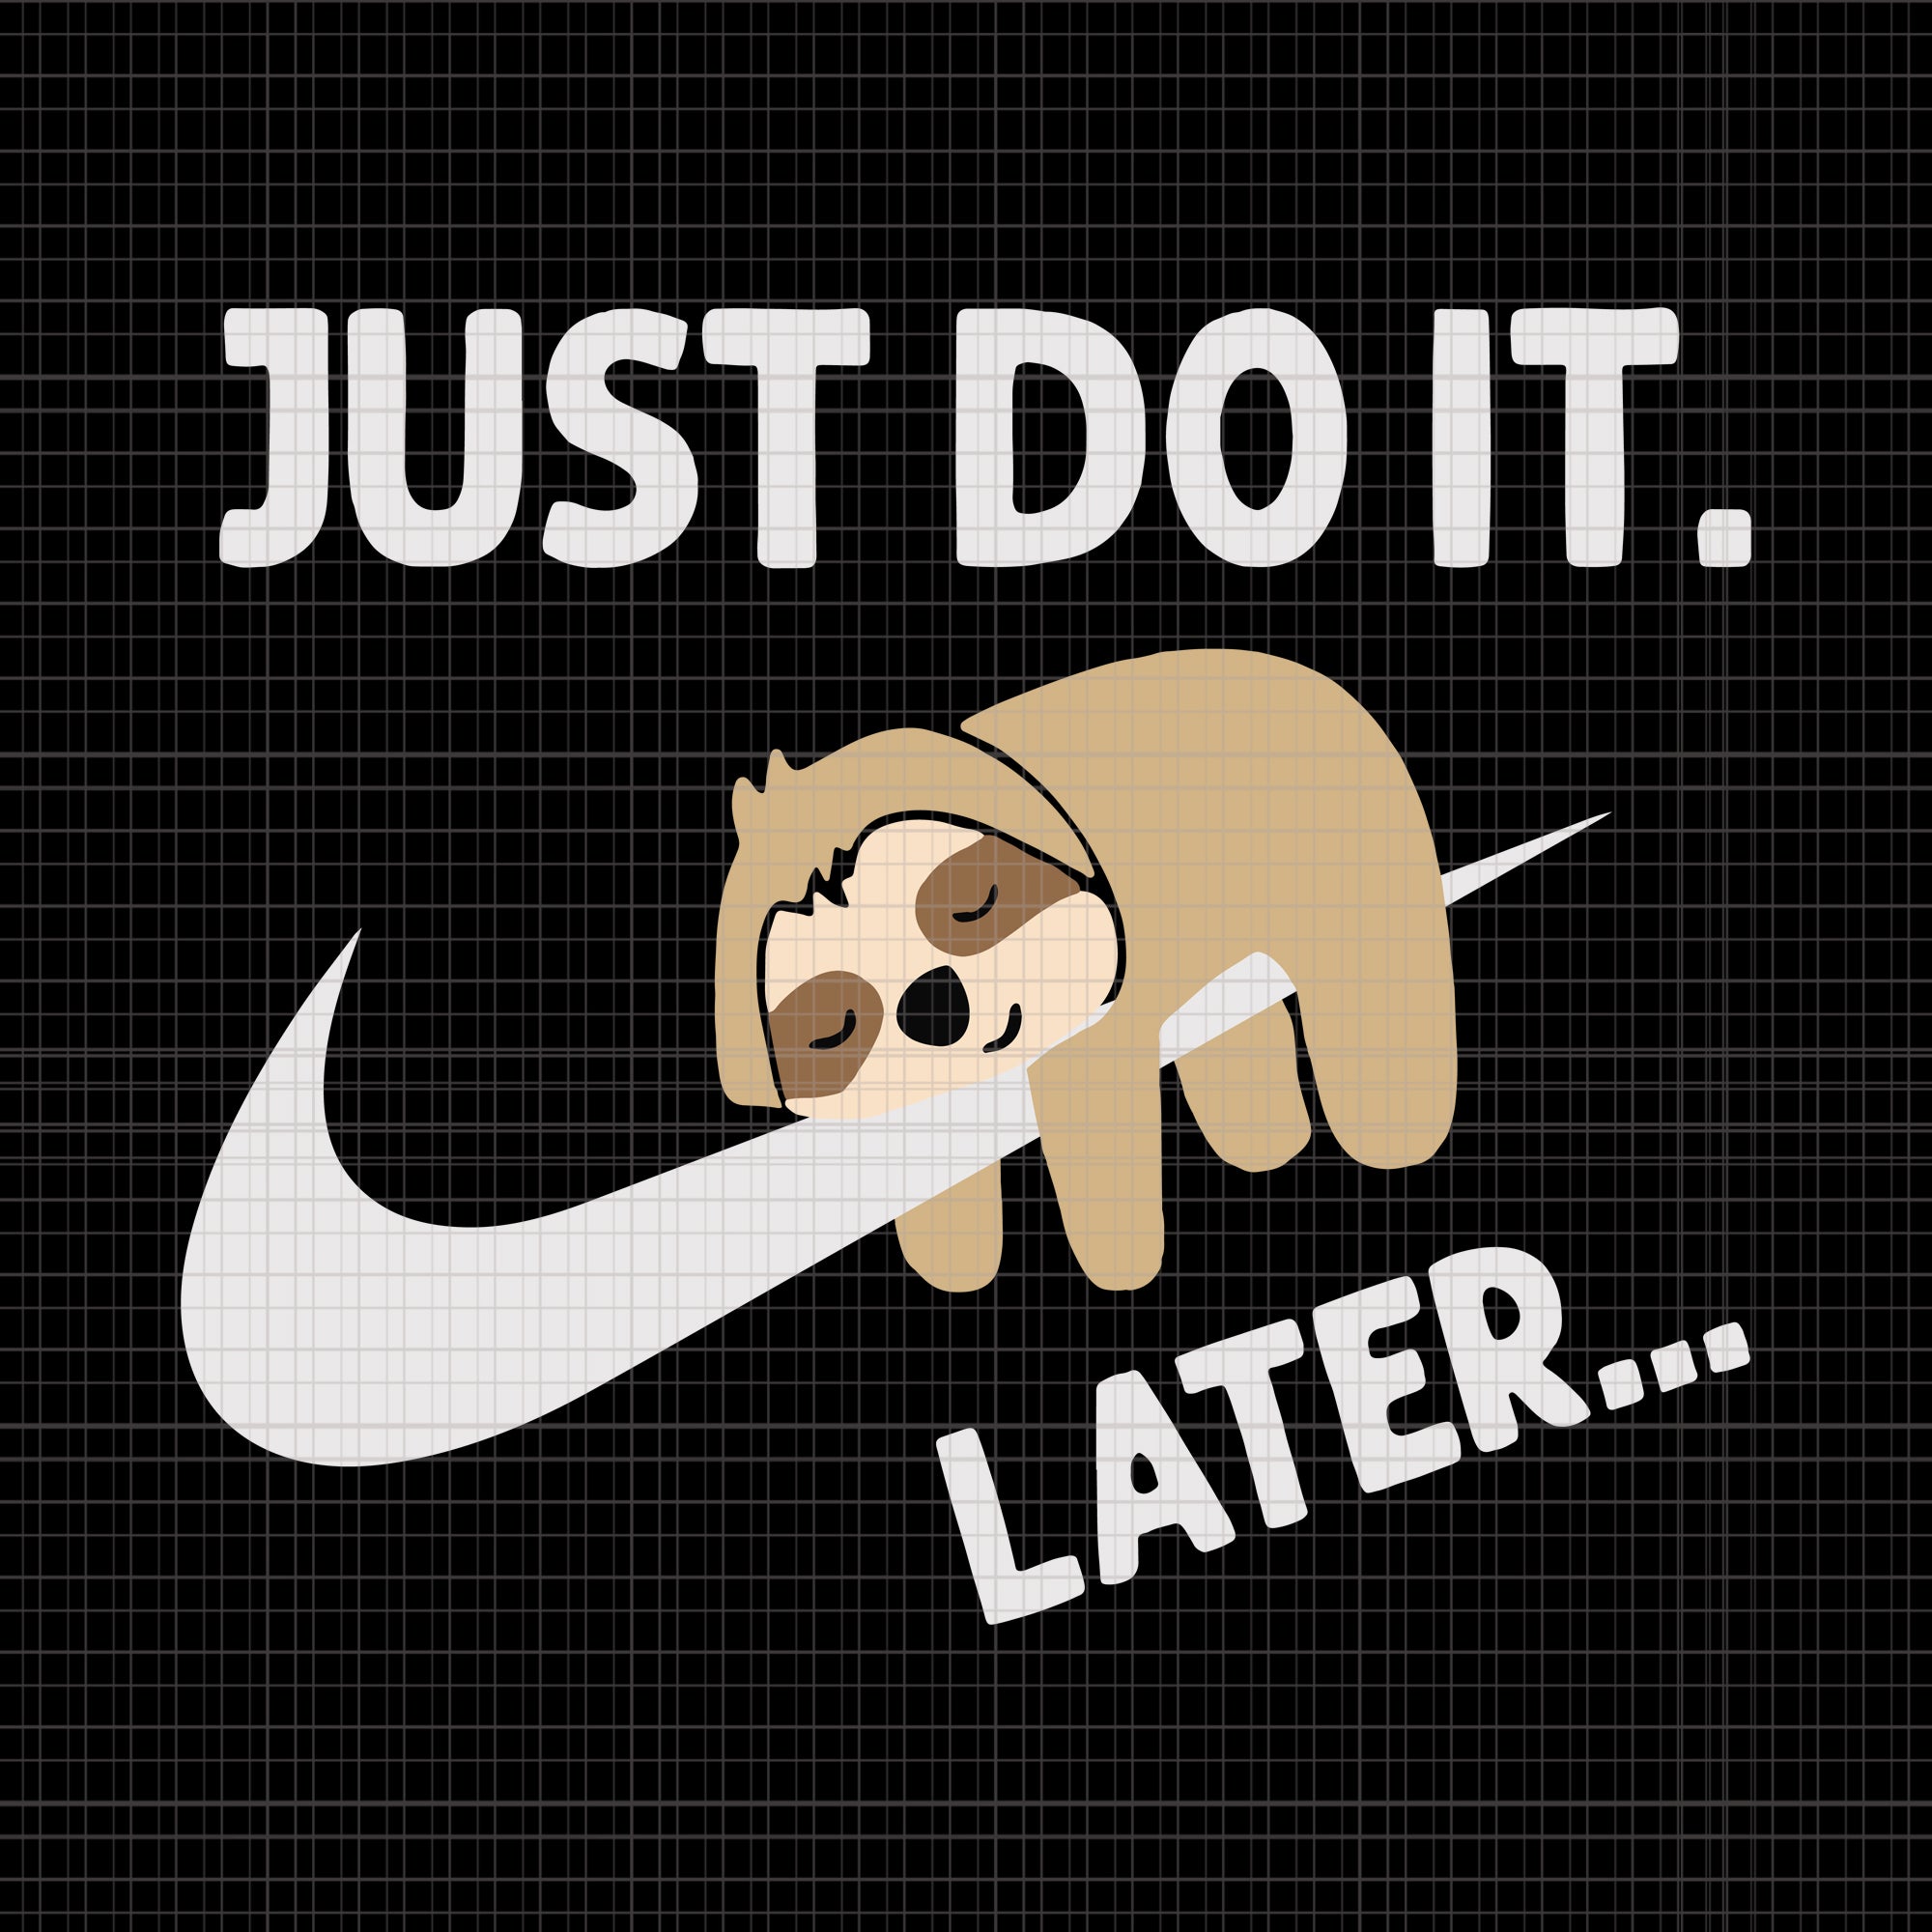 Just do it later Lazy Sloth, Lazy Sloth svg, Lazy Sloth png, Just do it later Lazy Sloth svg, Just do it later Lazy Sloth png, Just do it later Lazy Sloth